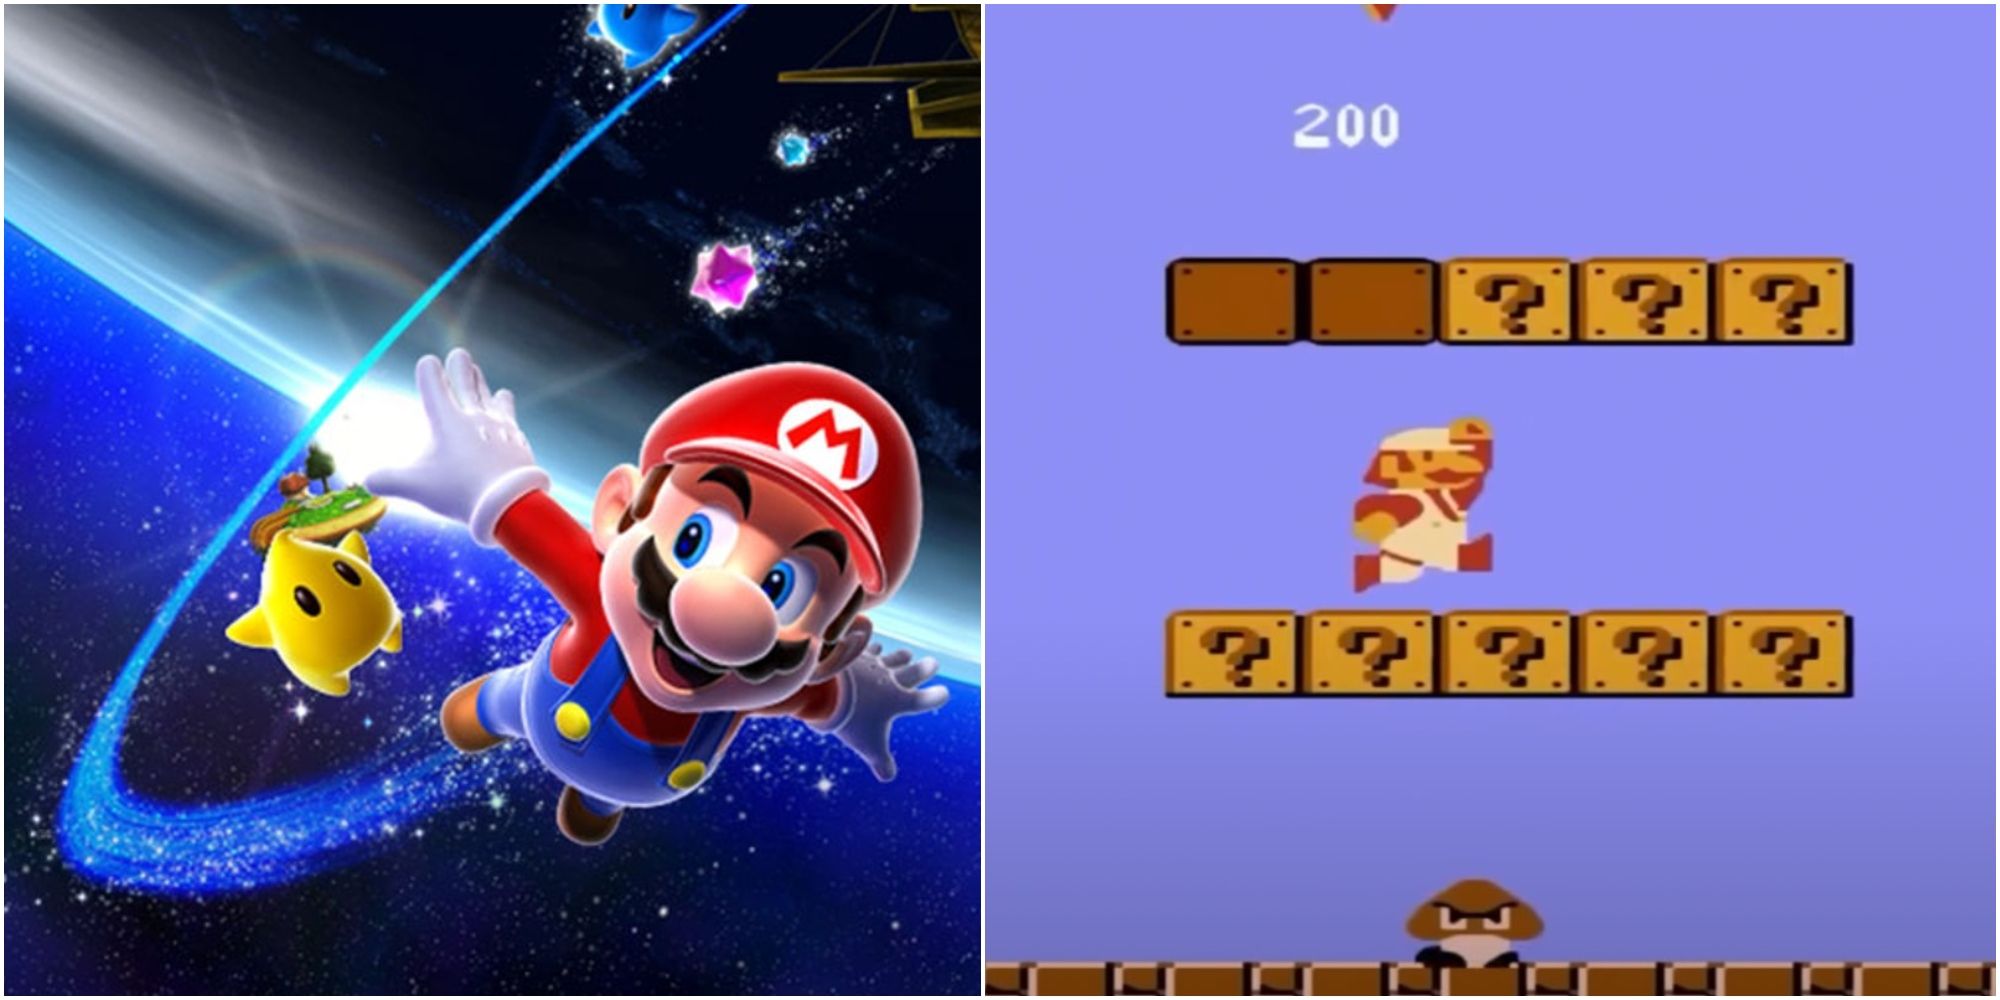 Mario flying through a galaxy beside original Mario punching a block